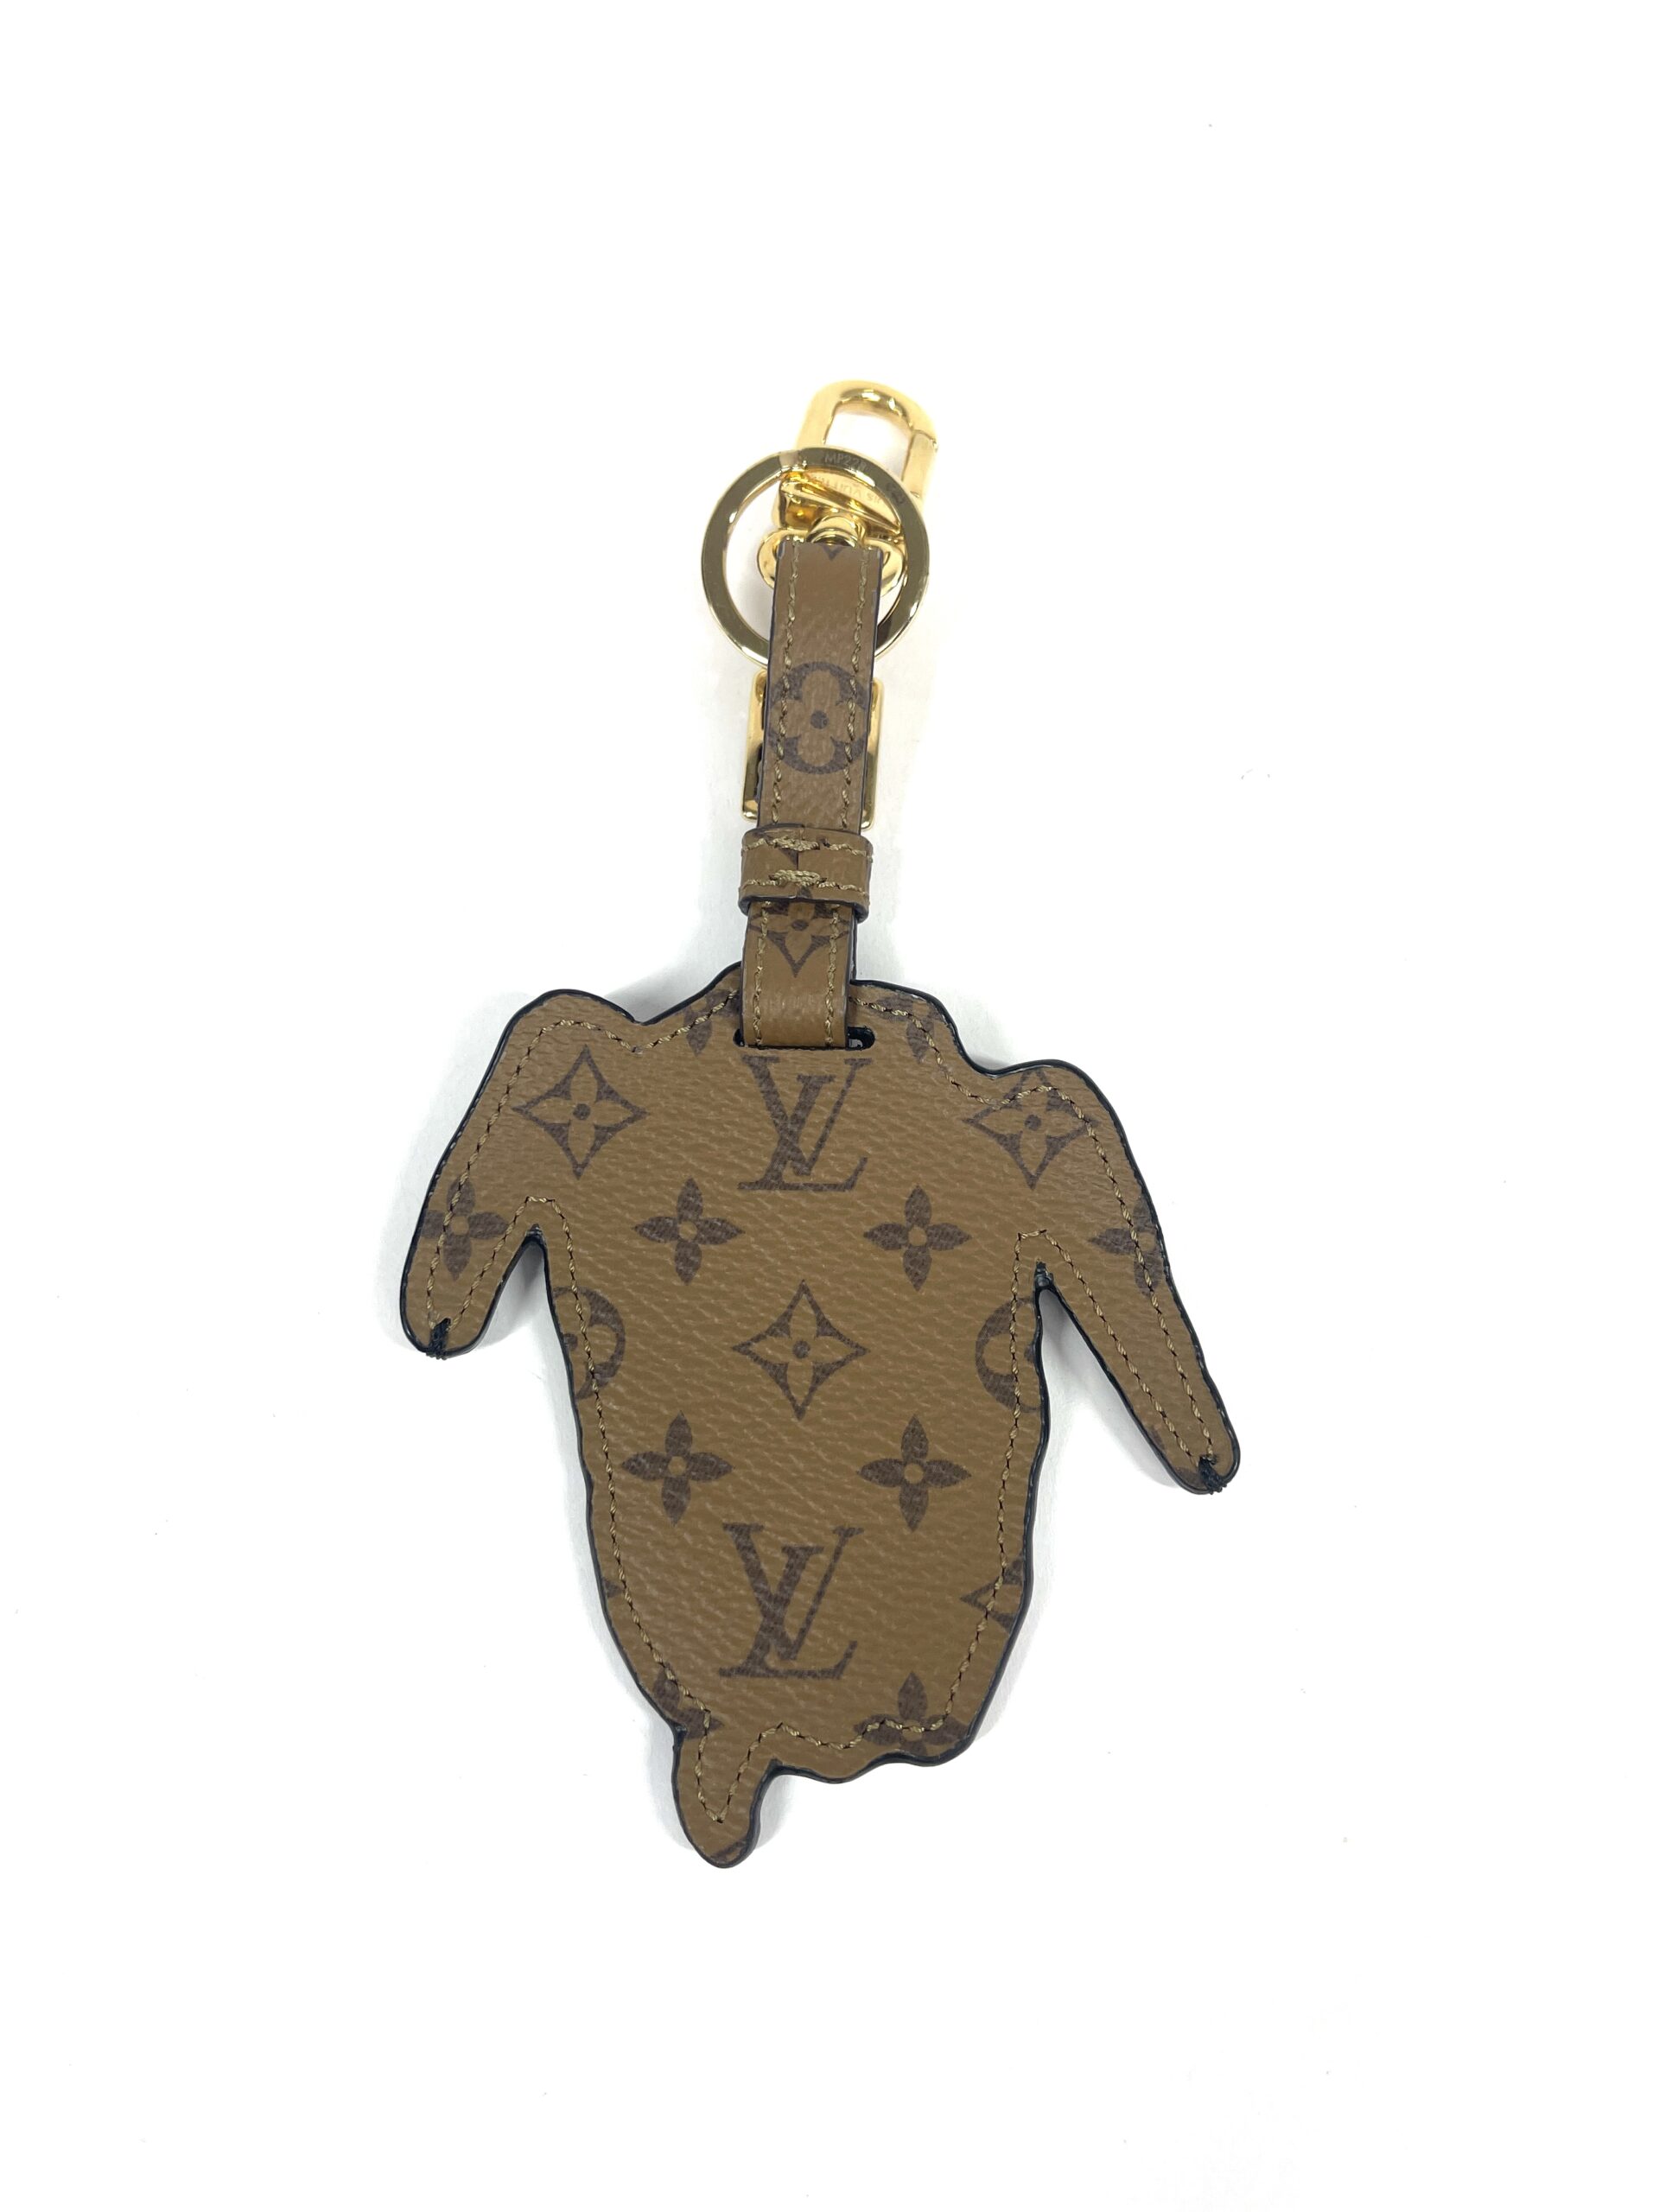 Louis Vuitton Catogram Dog Bag Charm Keychain